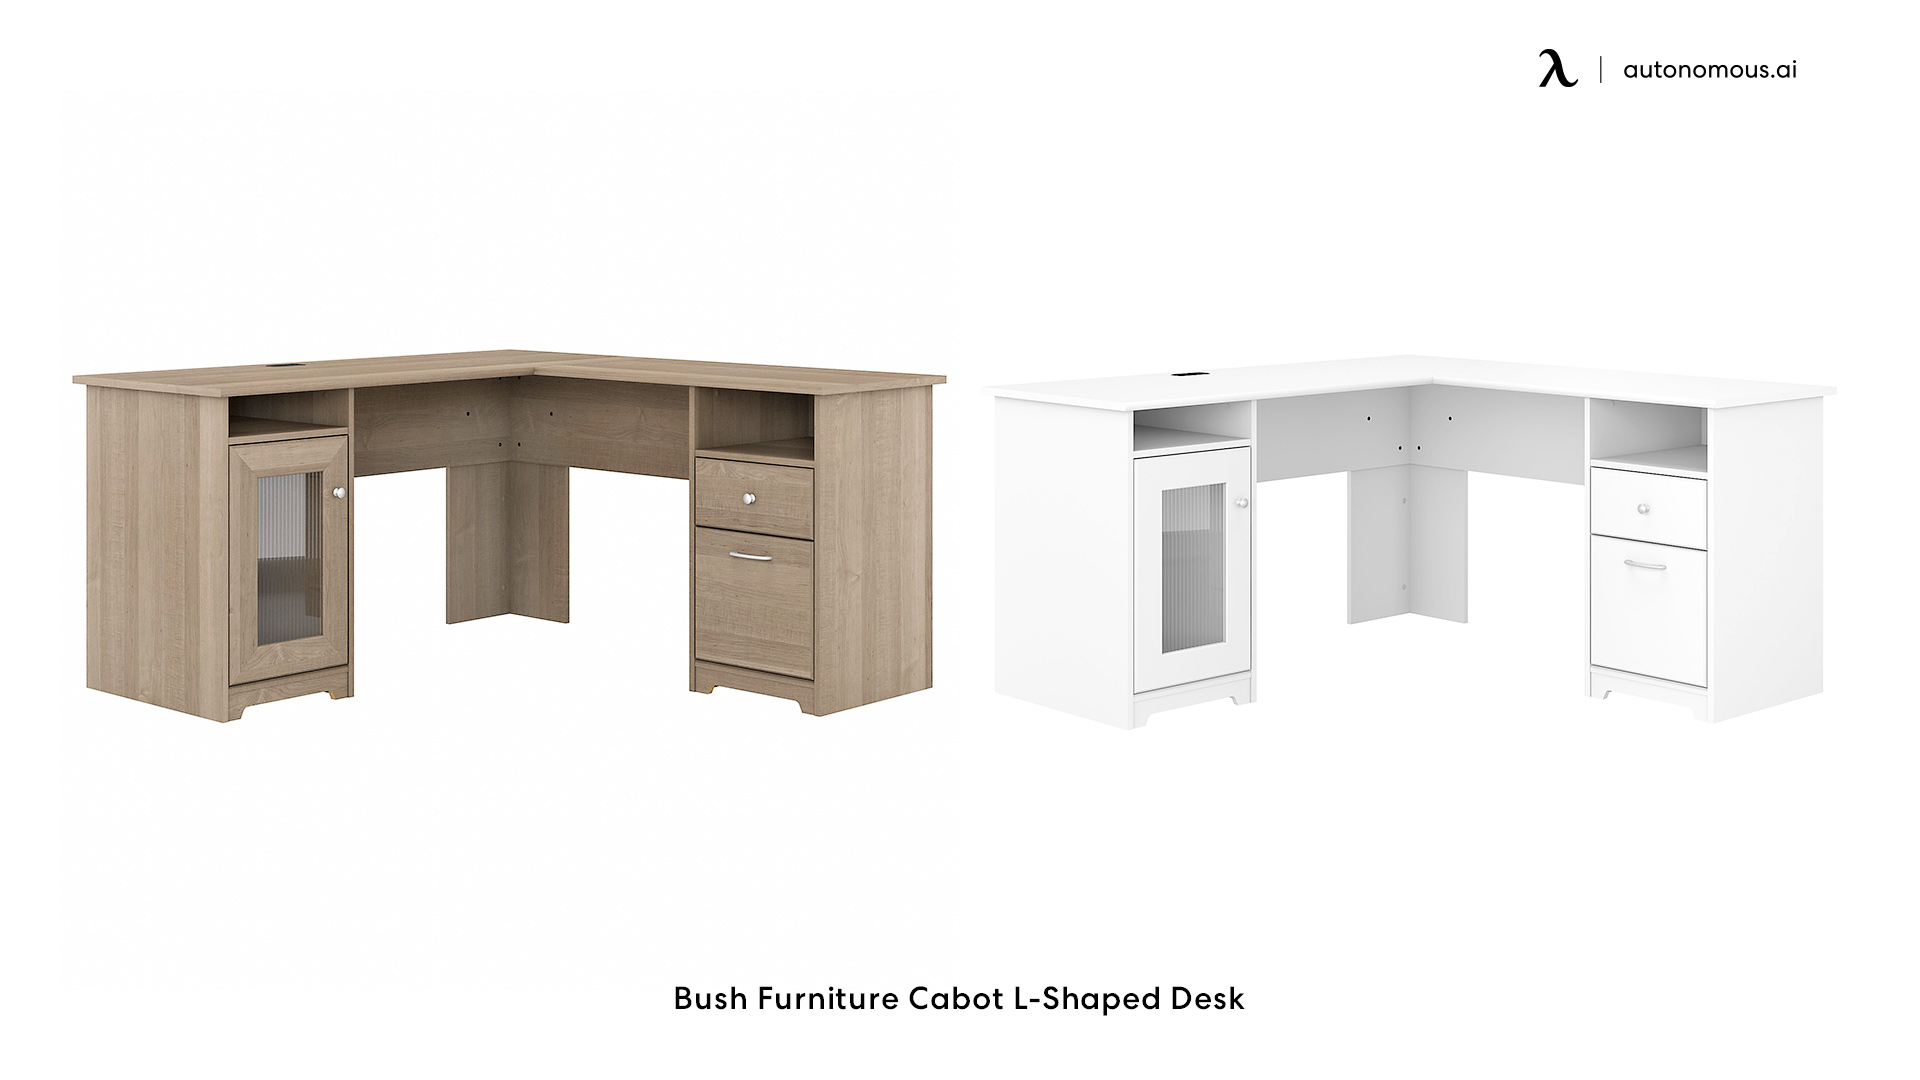 Bush L-shaped desk for a home office